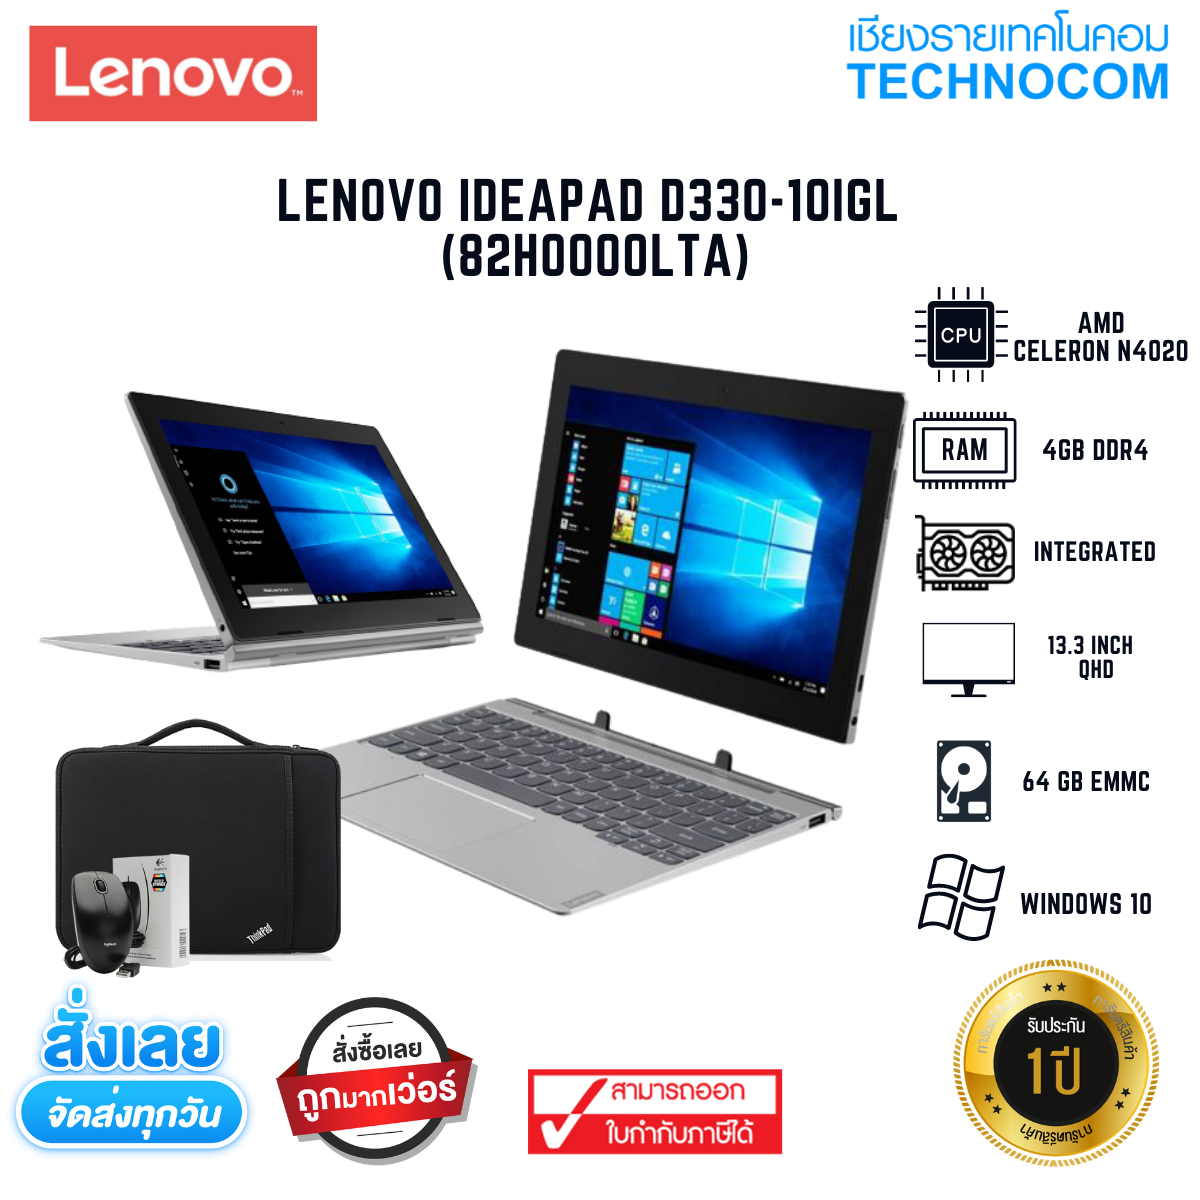 LENOVO IDEAPAD D330-10IGL CELERON N4020/4GB/64GB/INTEGRATED/WIN 10 PRO(82H0000LTA)